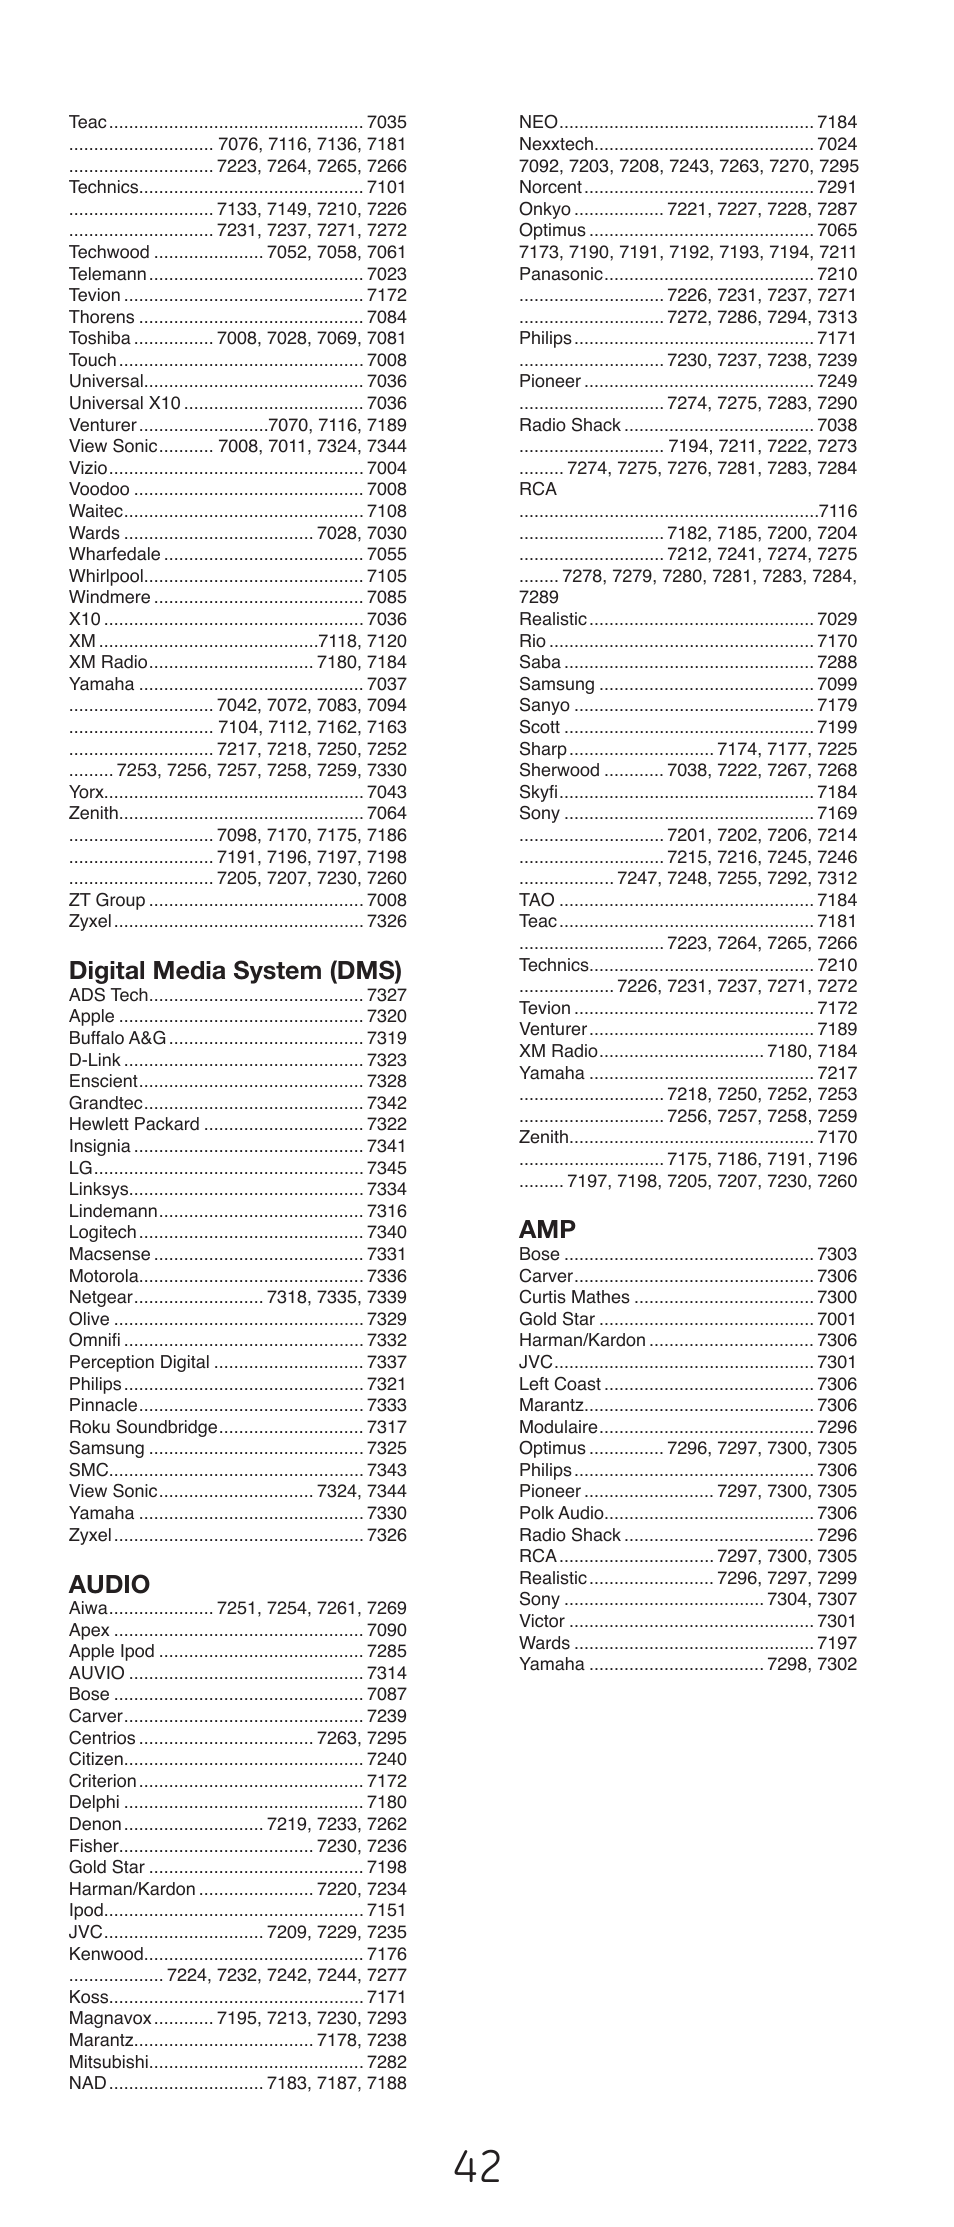 Digital media system (dms), Audio | GE 24944-v2 Universal Remote User